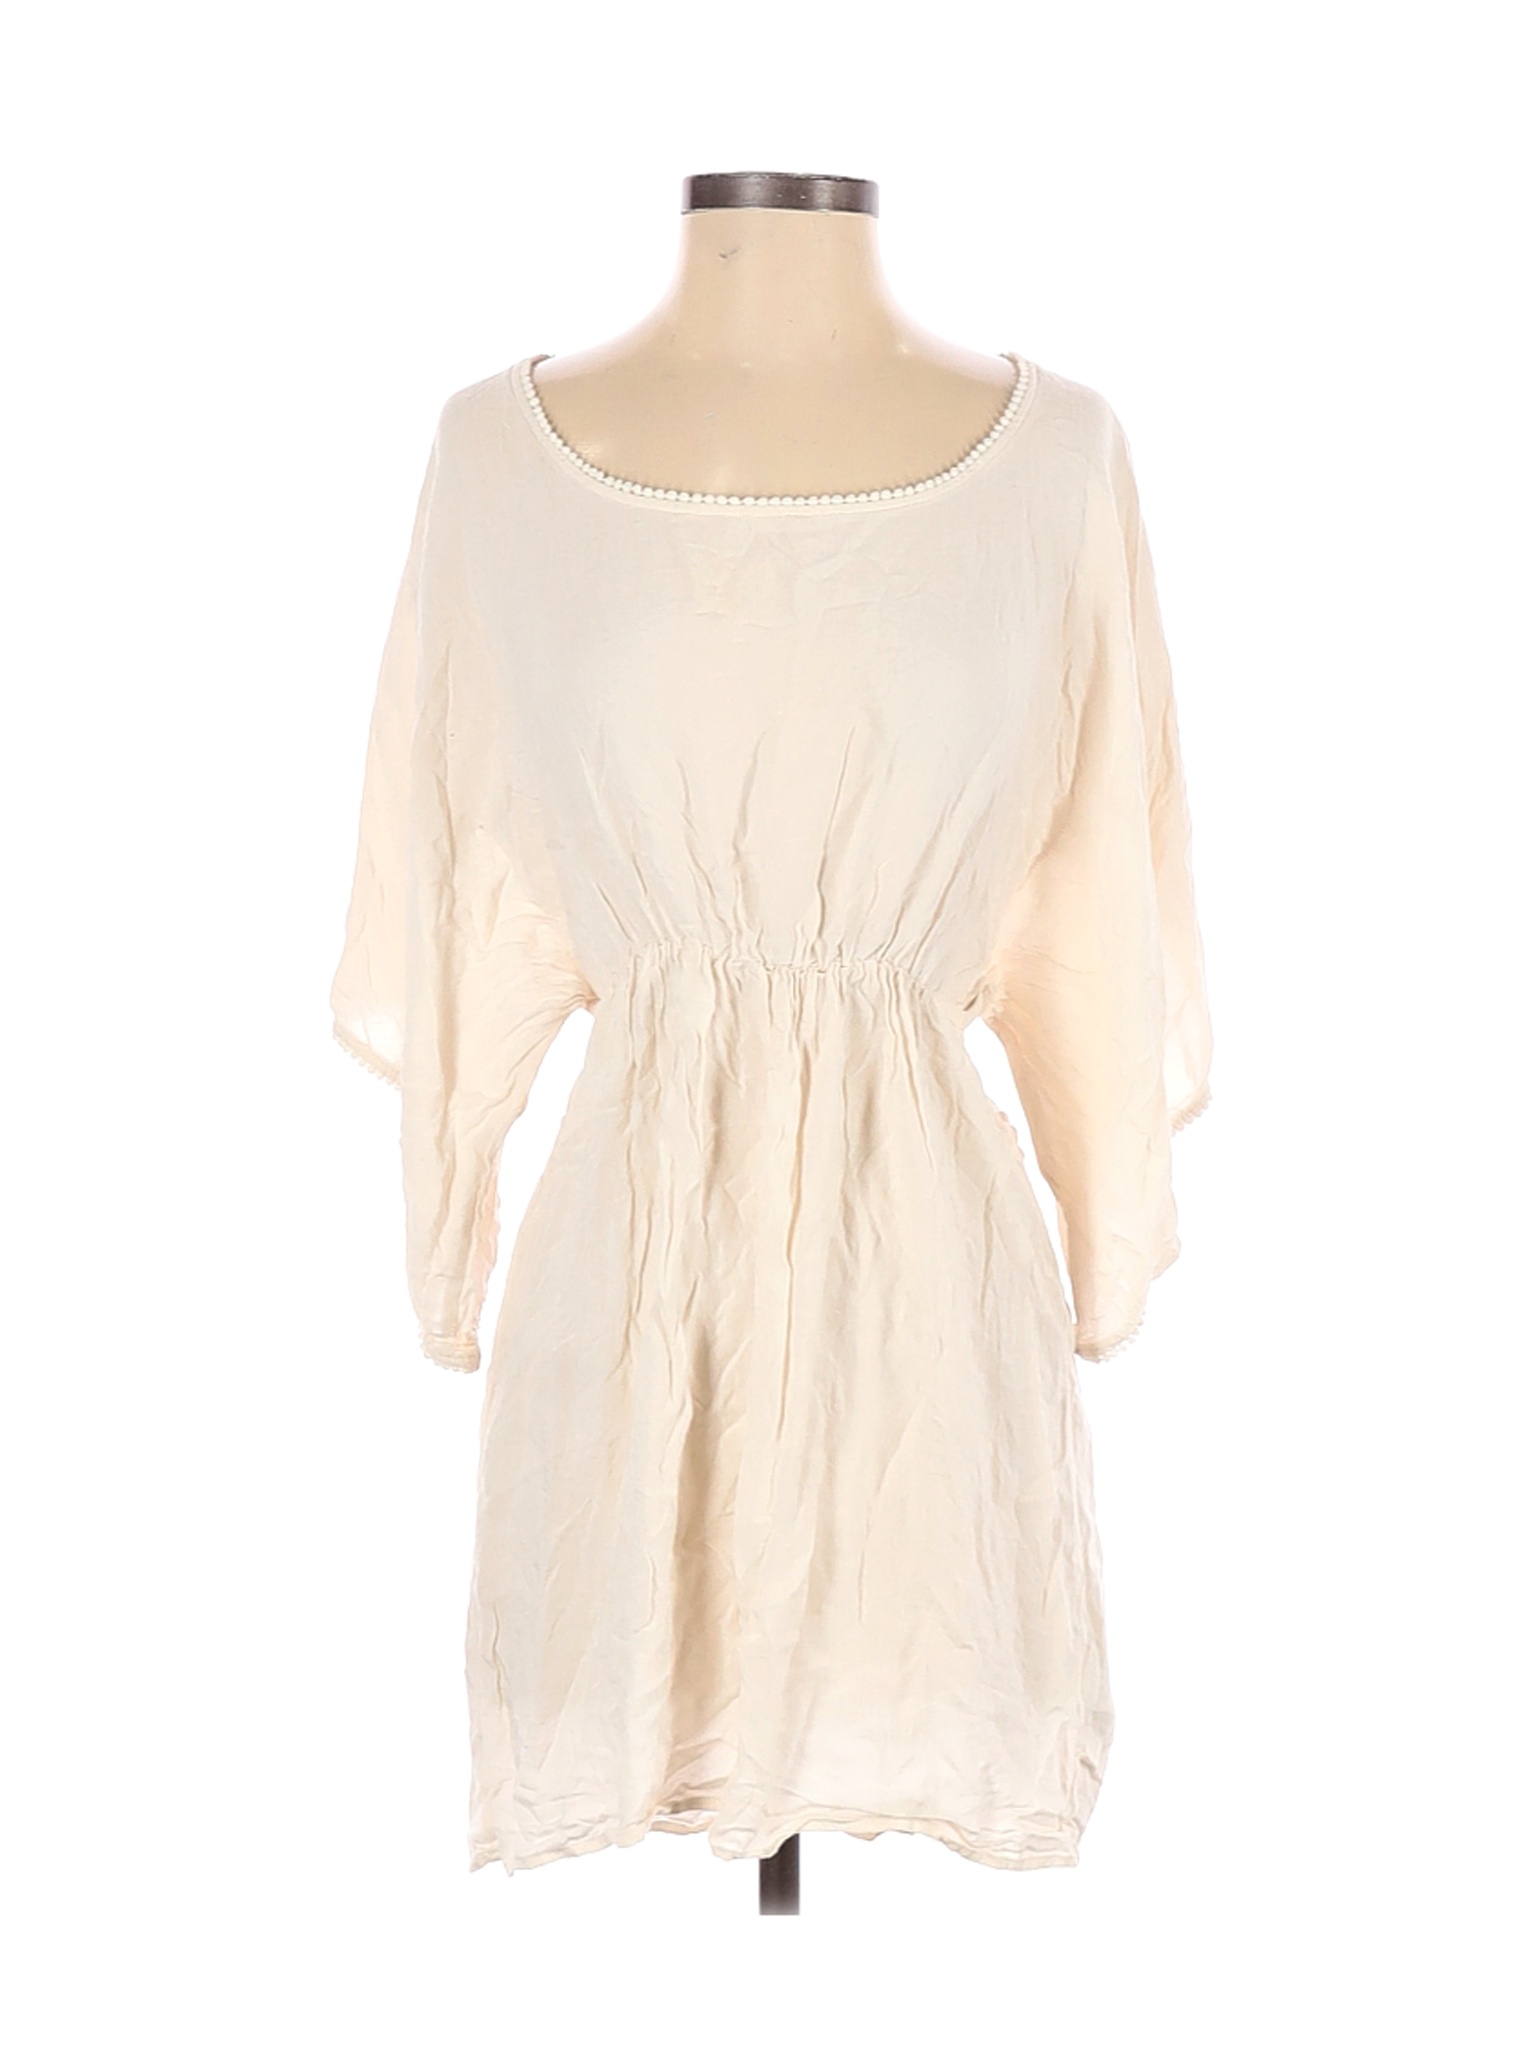 H&M Women Ivory Casual Dress 8 | eBay